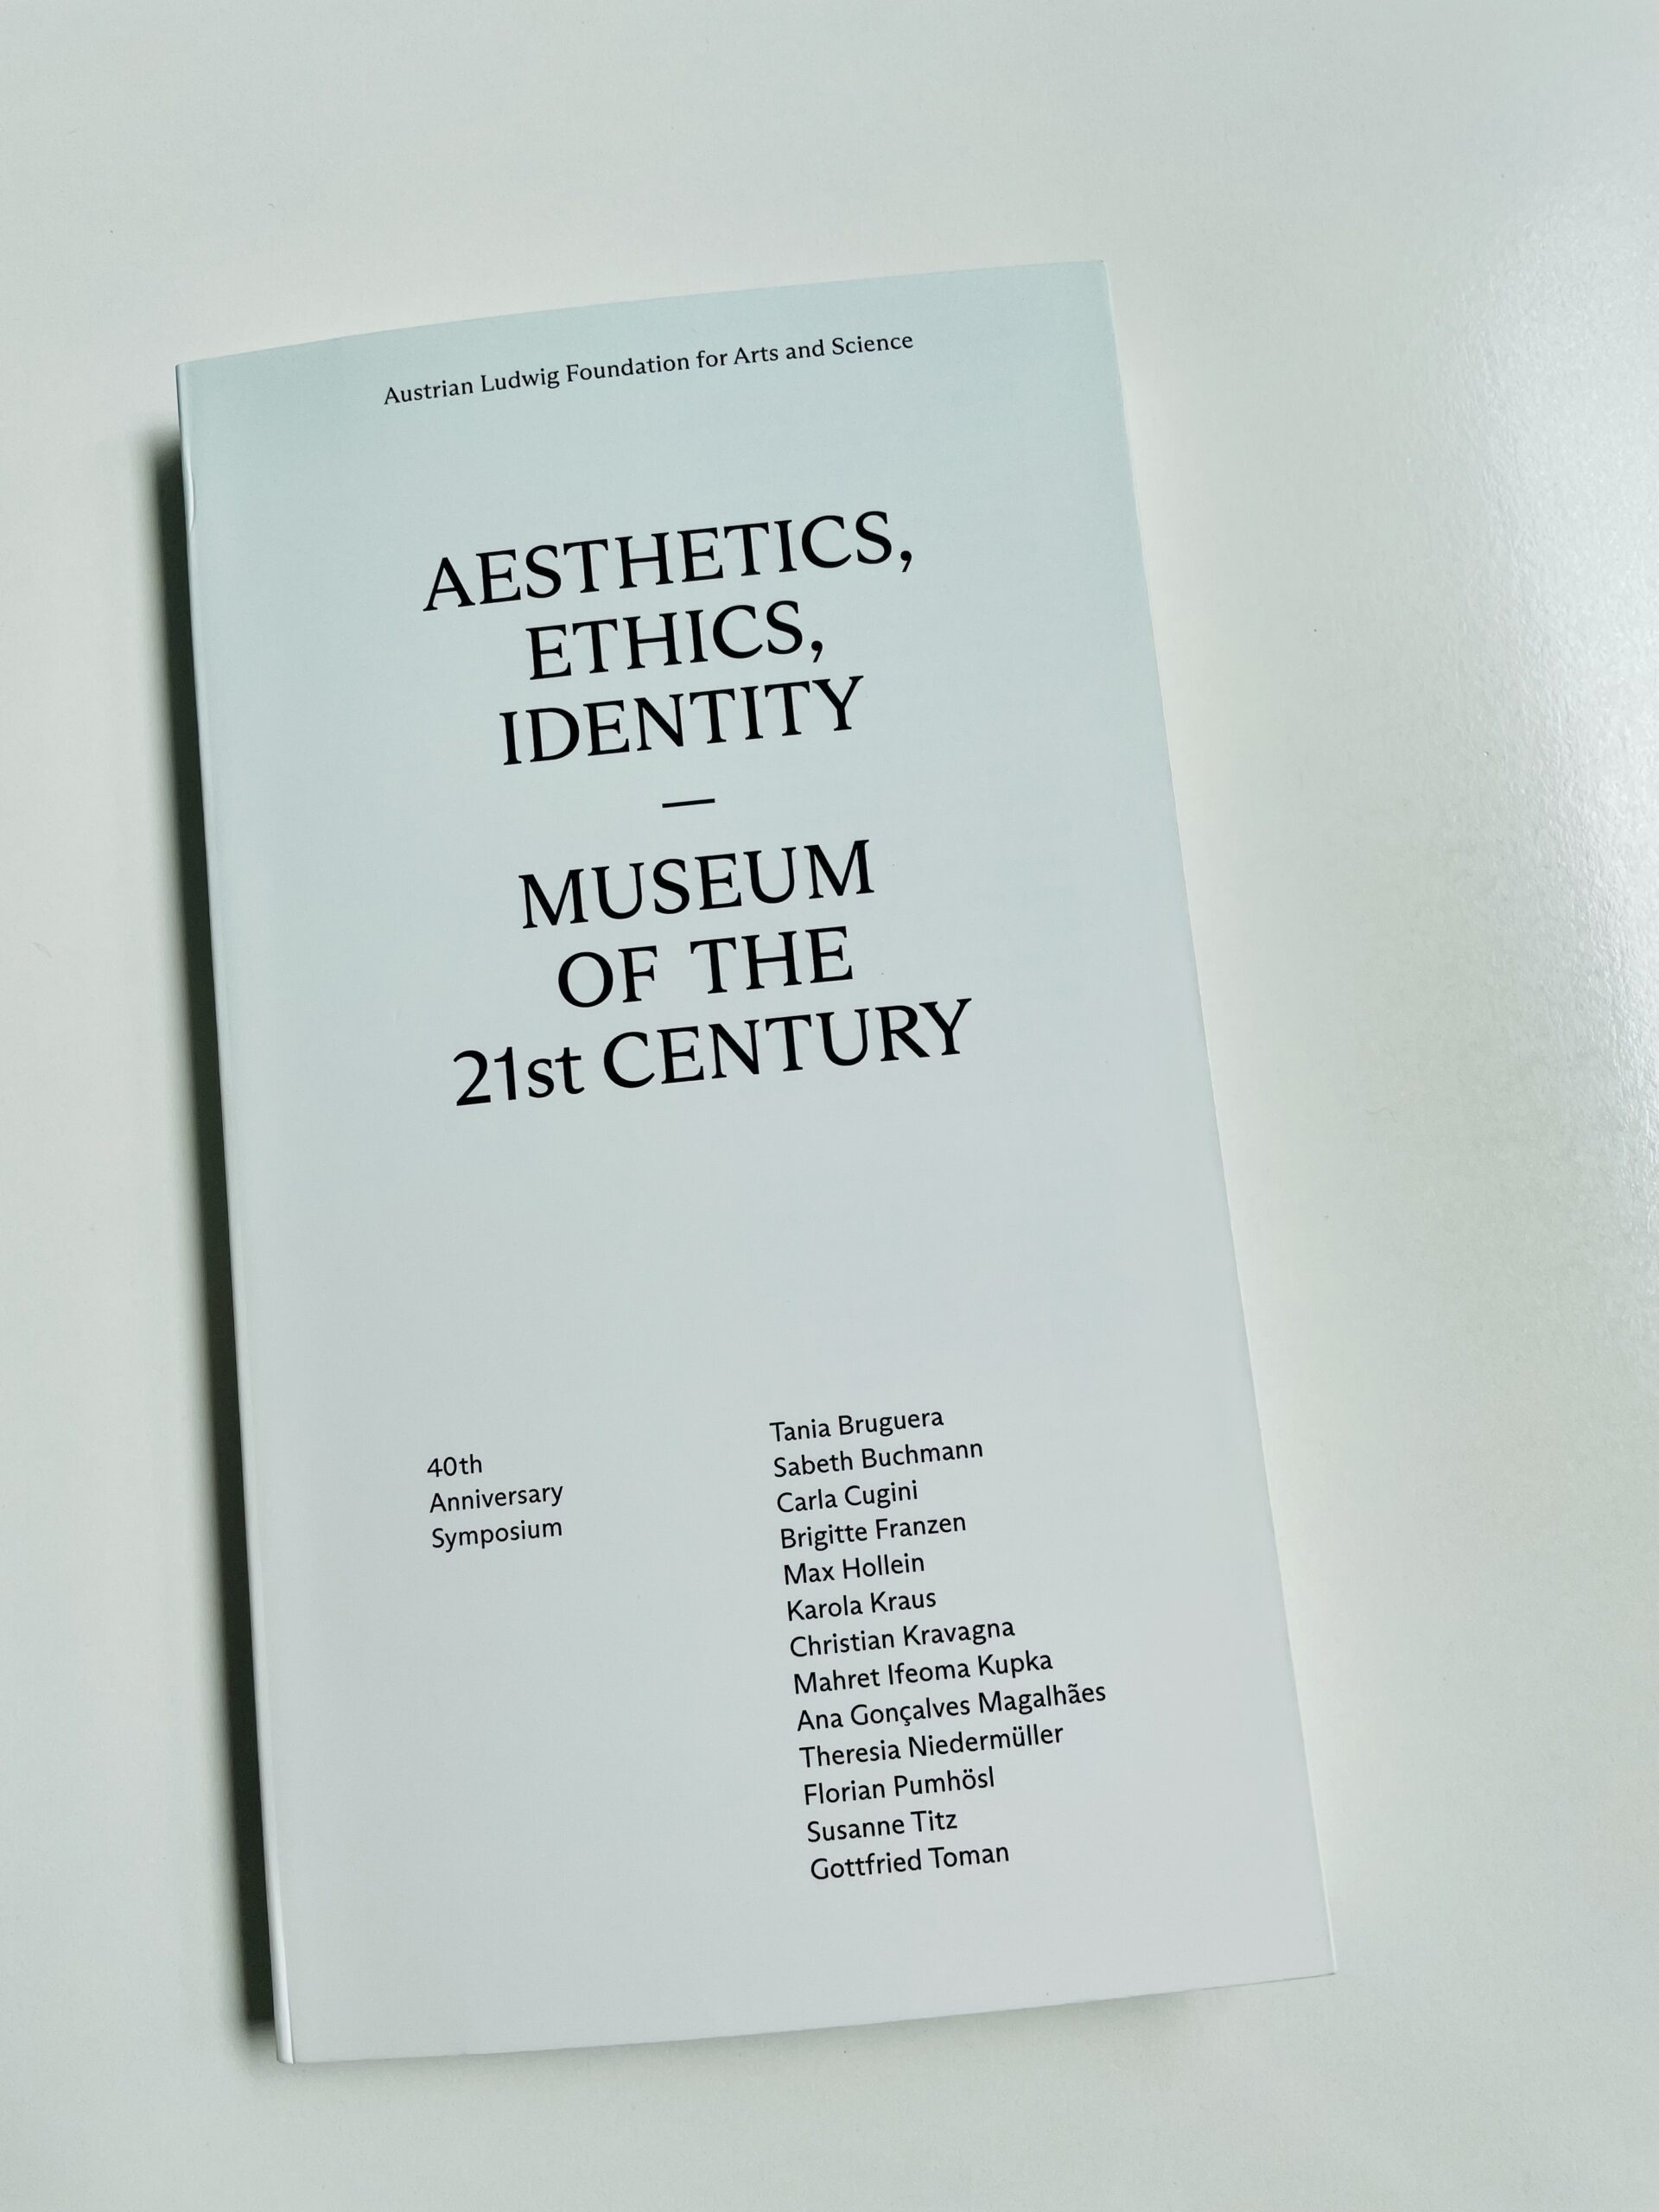 Publication: Aesthetics, Ethics, Identity. Museum of the 21st century